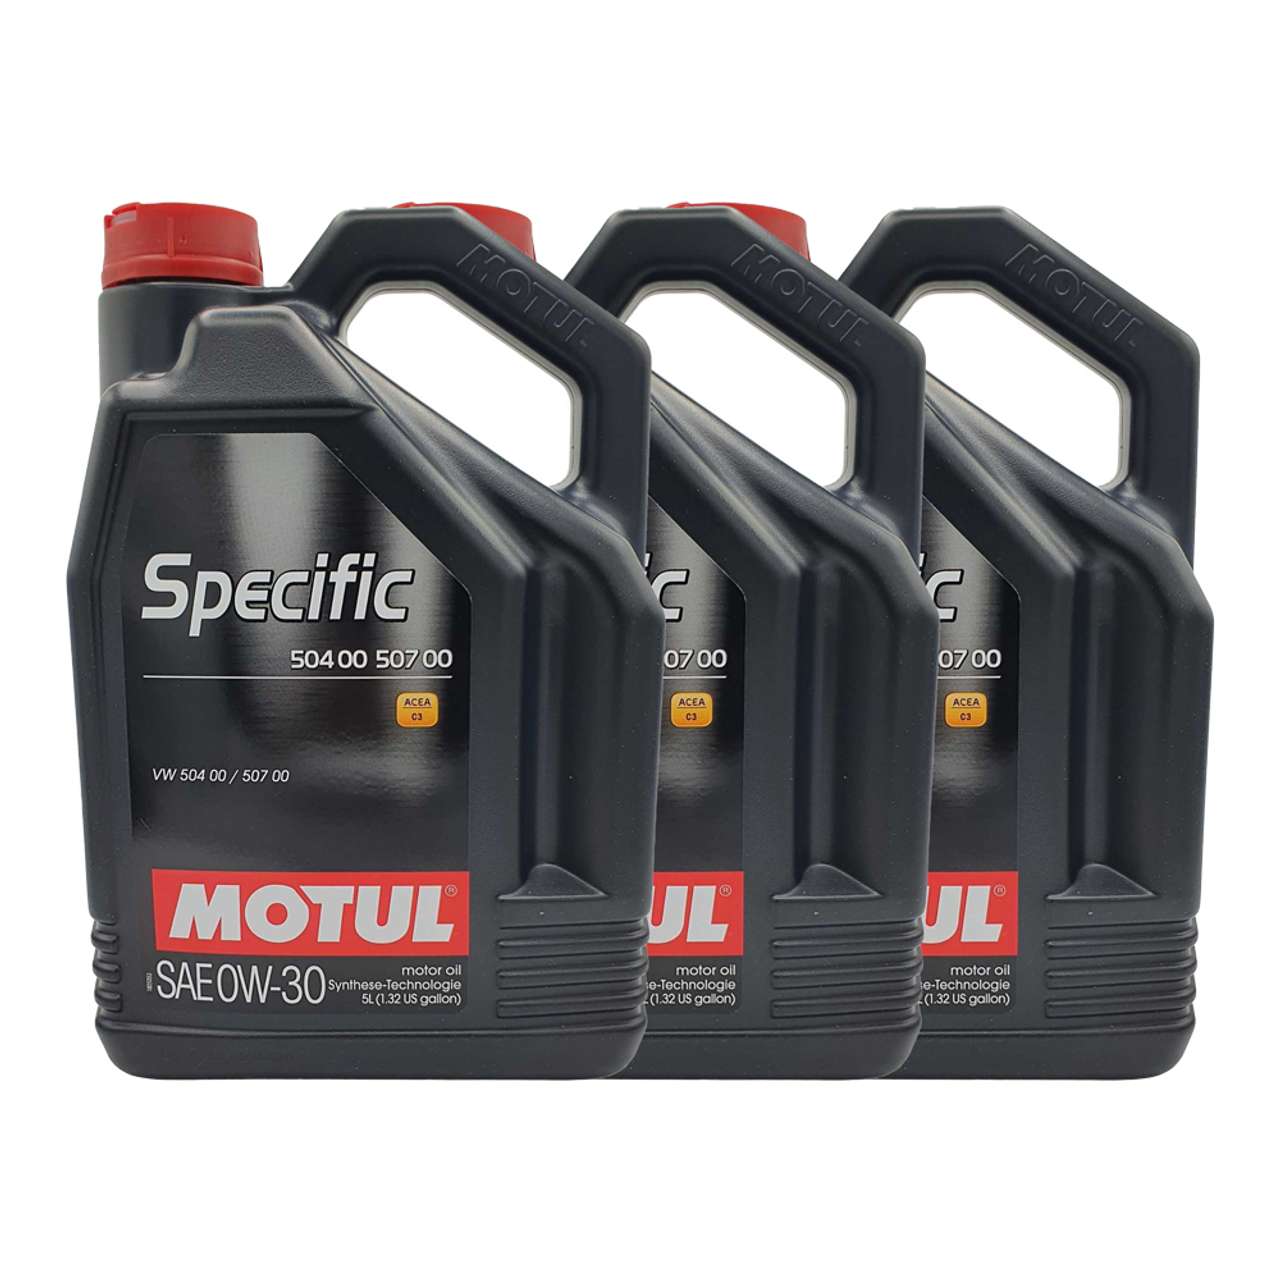 Motul Specific 504 00 - 507 00 0W-30 3x5 Liter